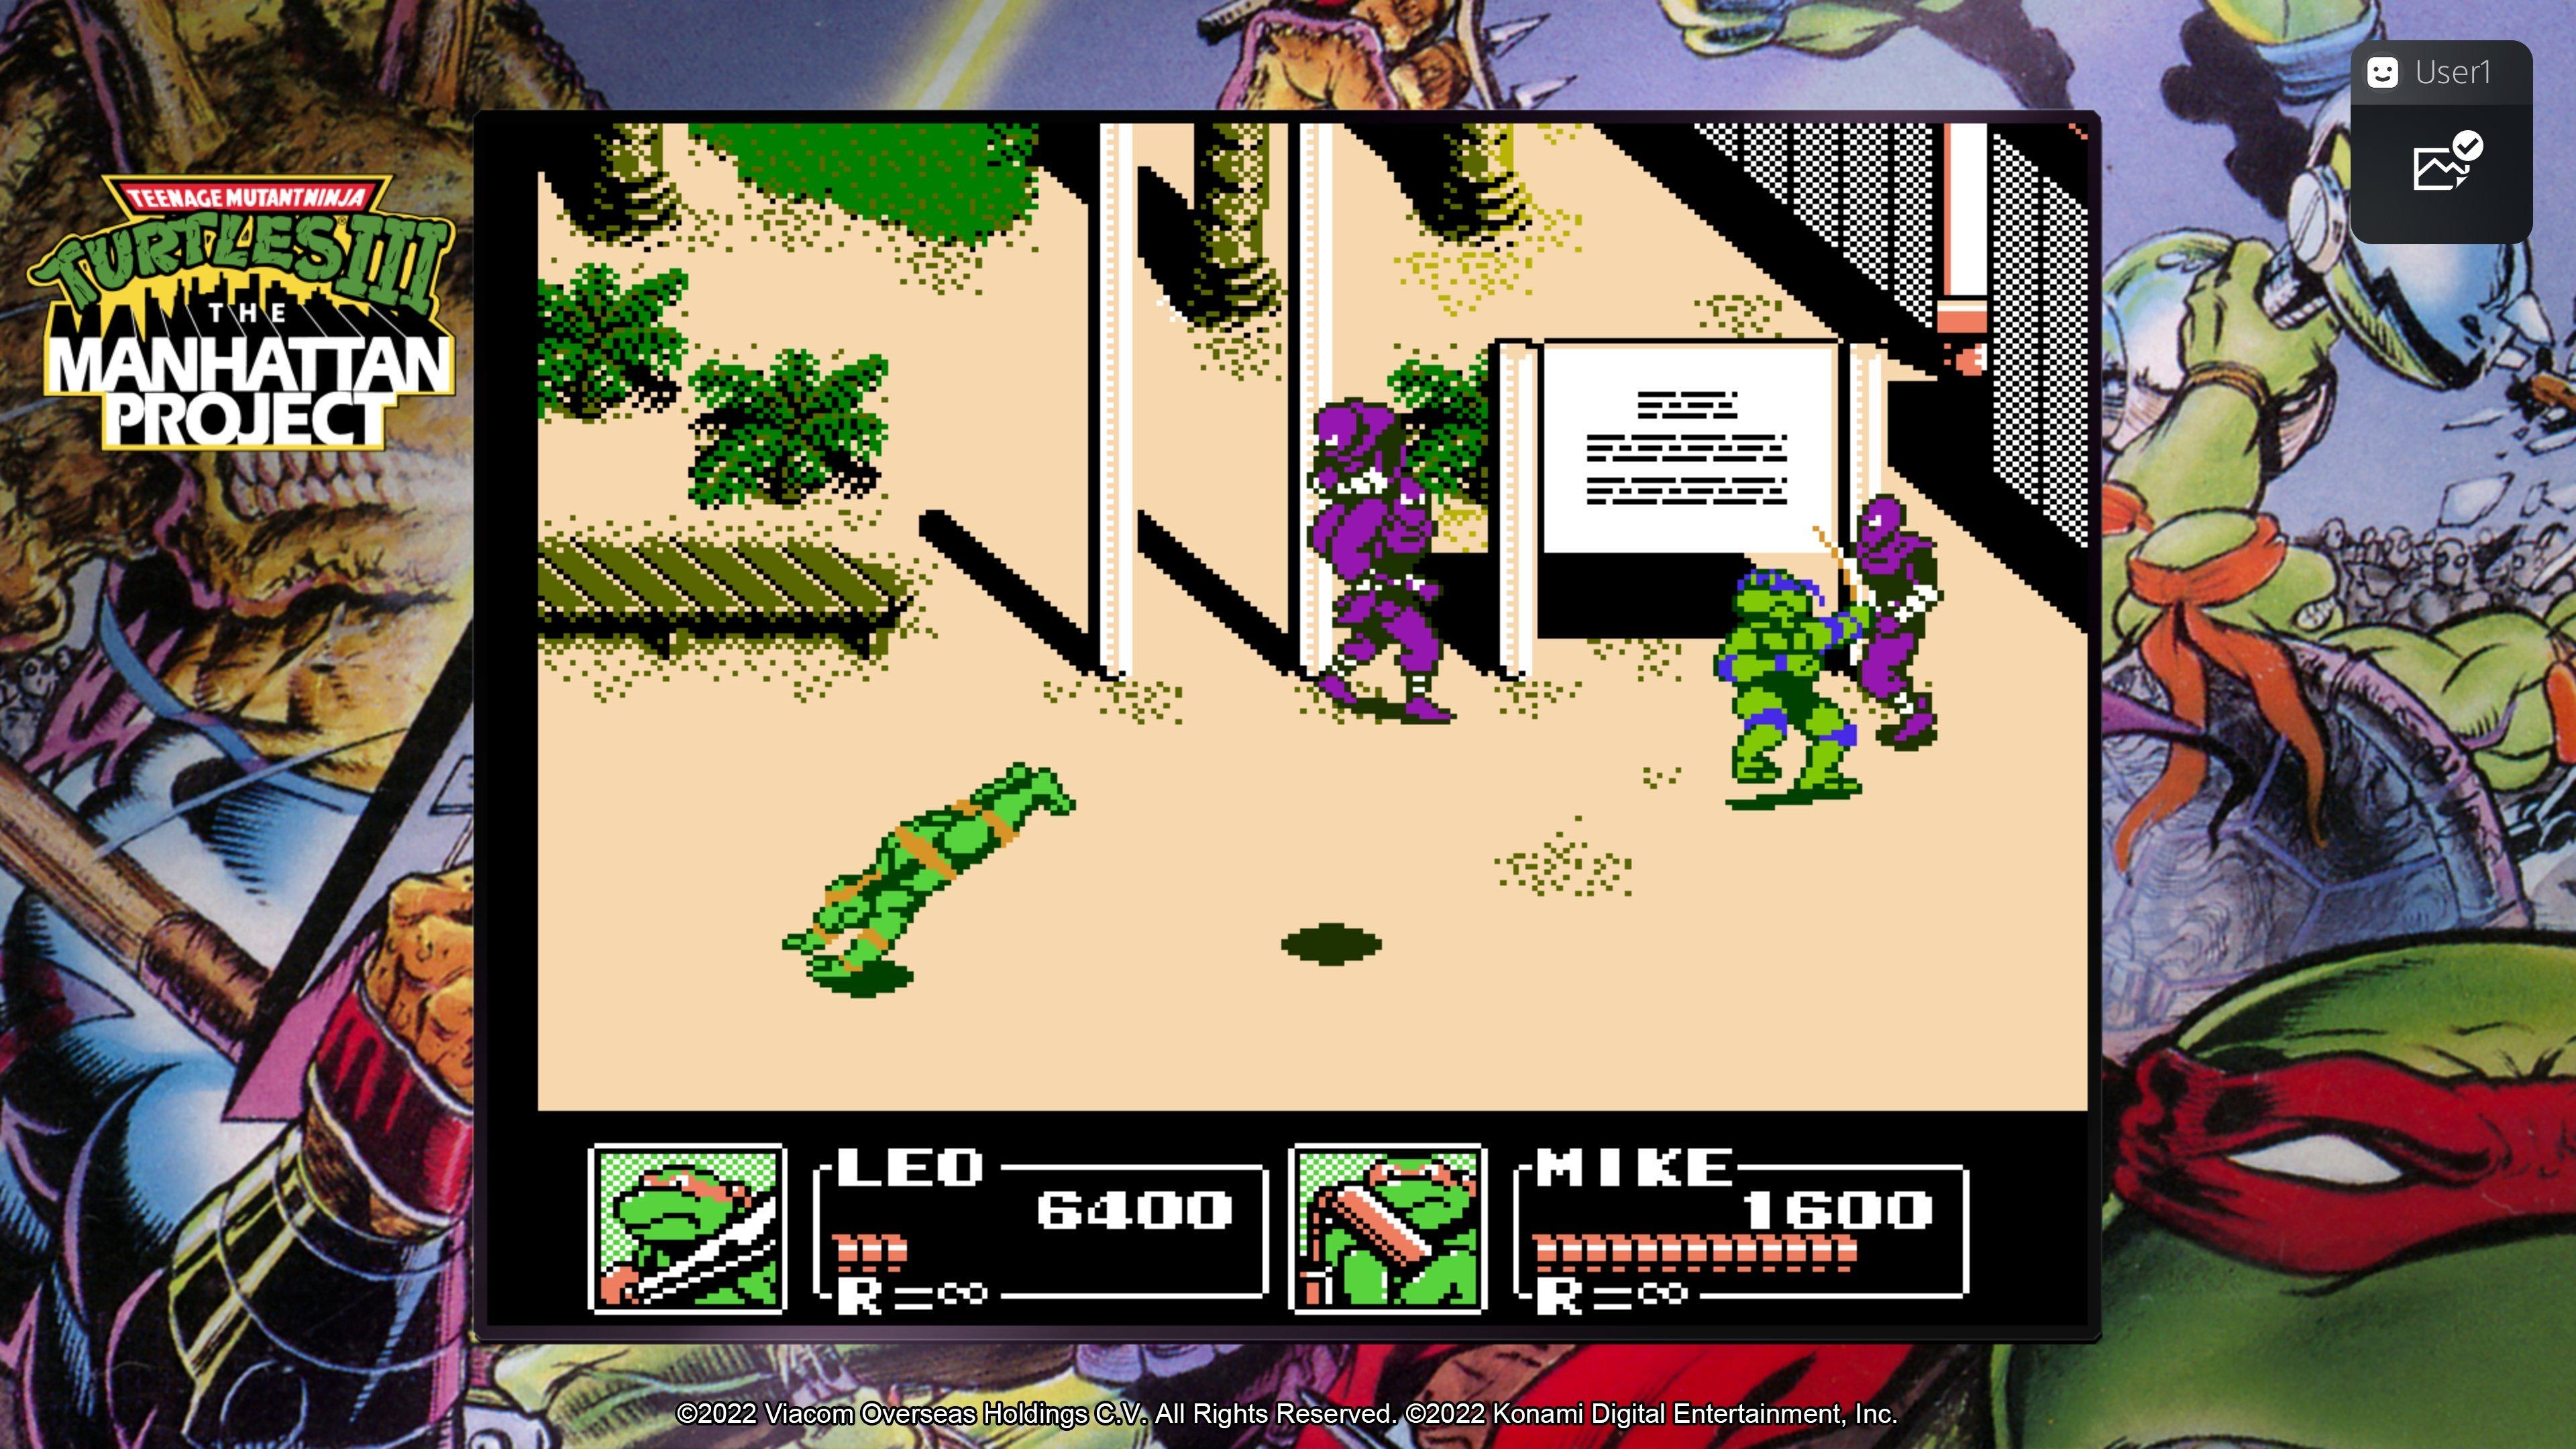 Teenage Mutant Ninja Turtles: The Cowabunga Collection - Xbox Series X